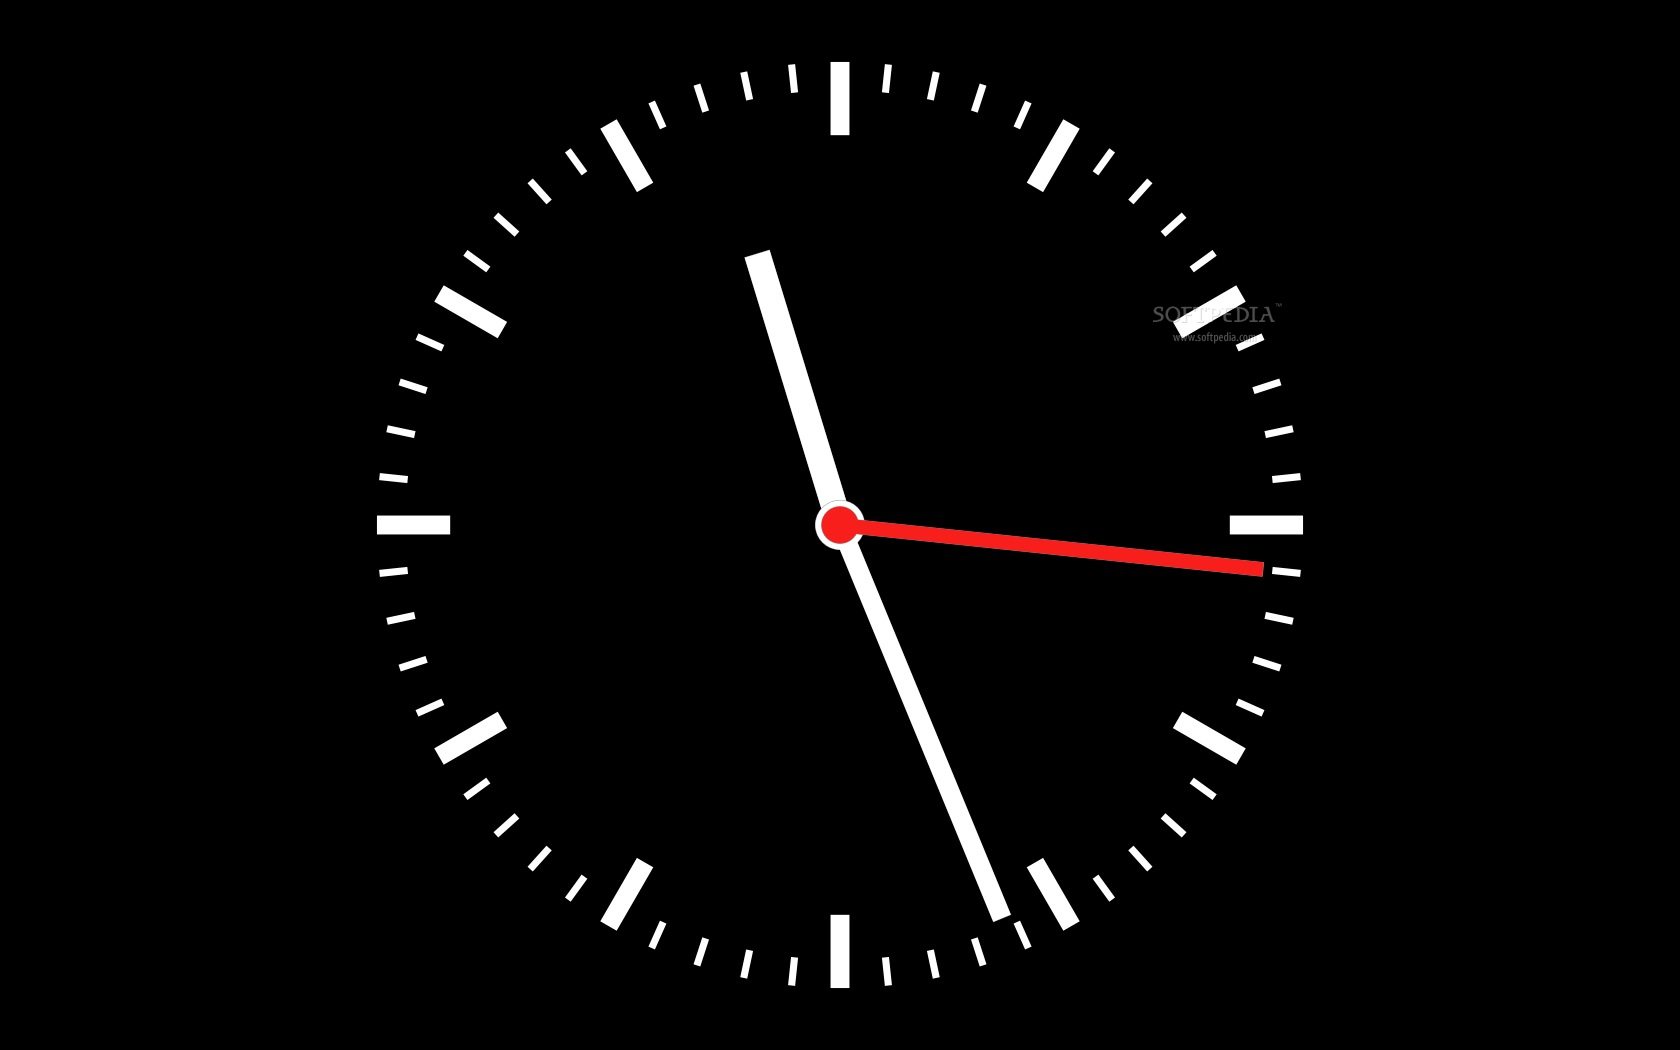 flip clock screensaver